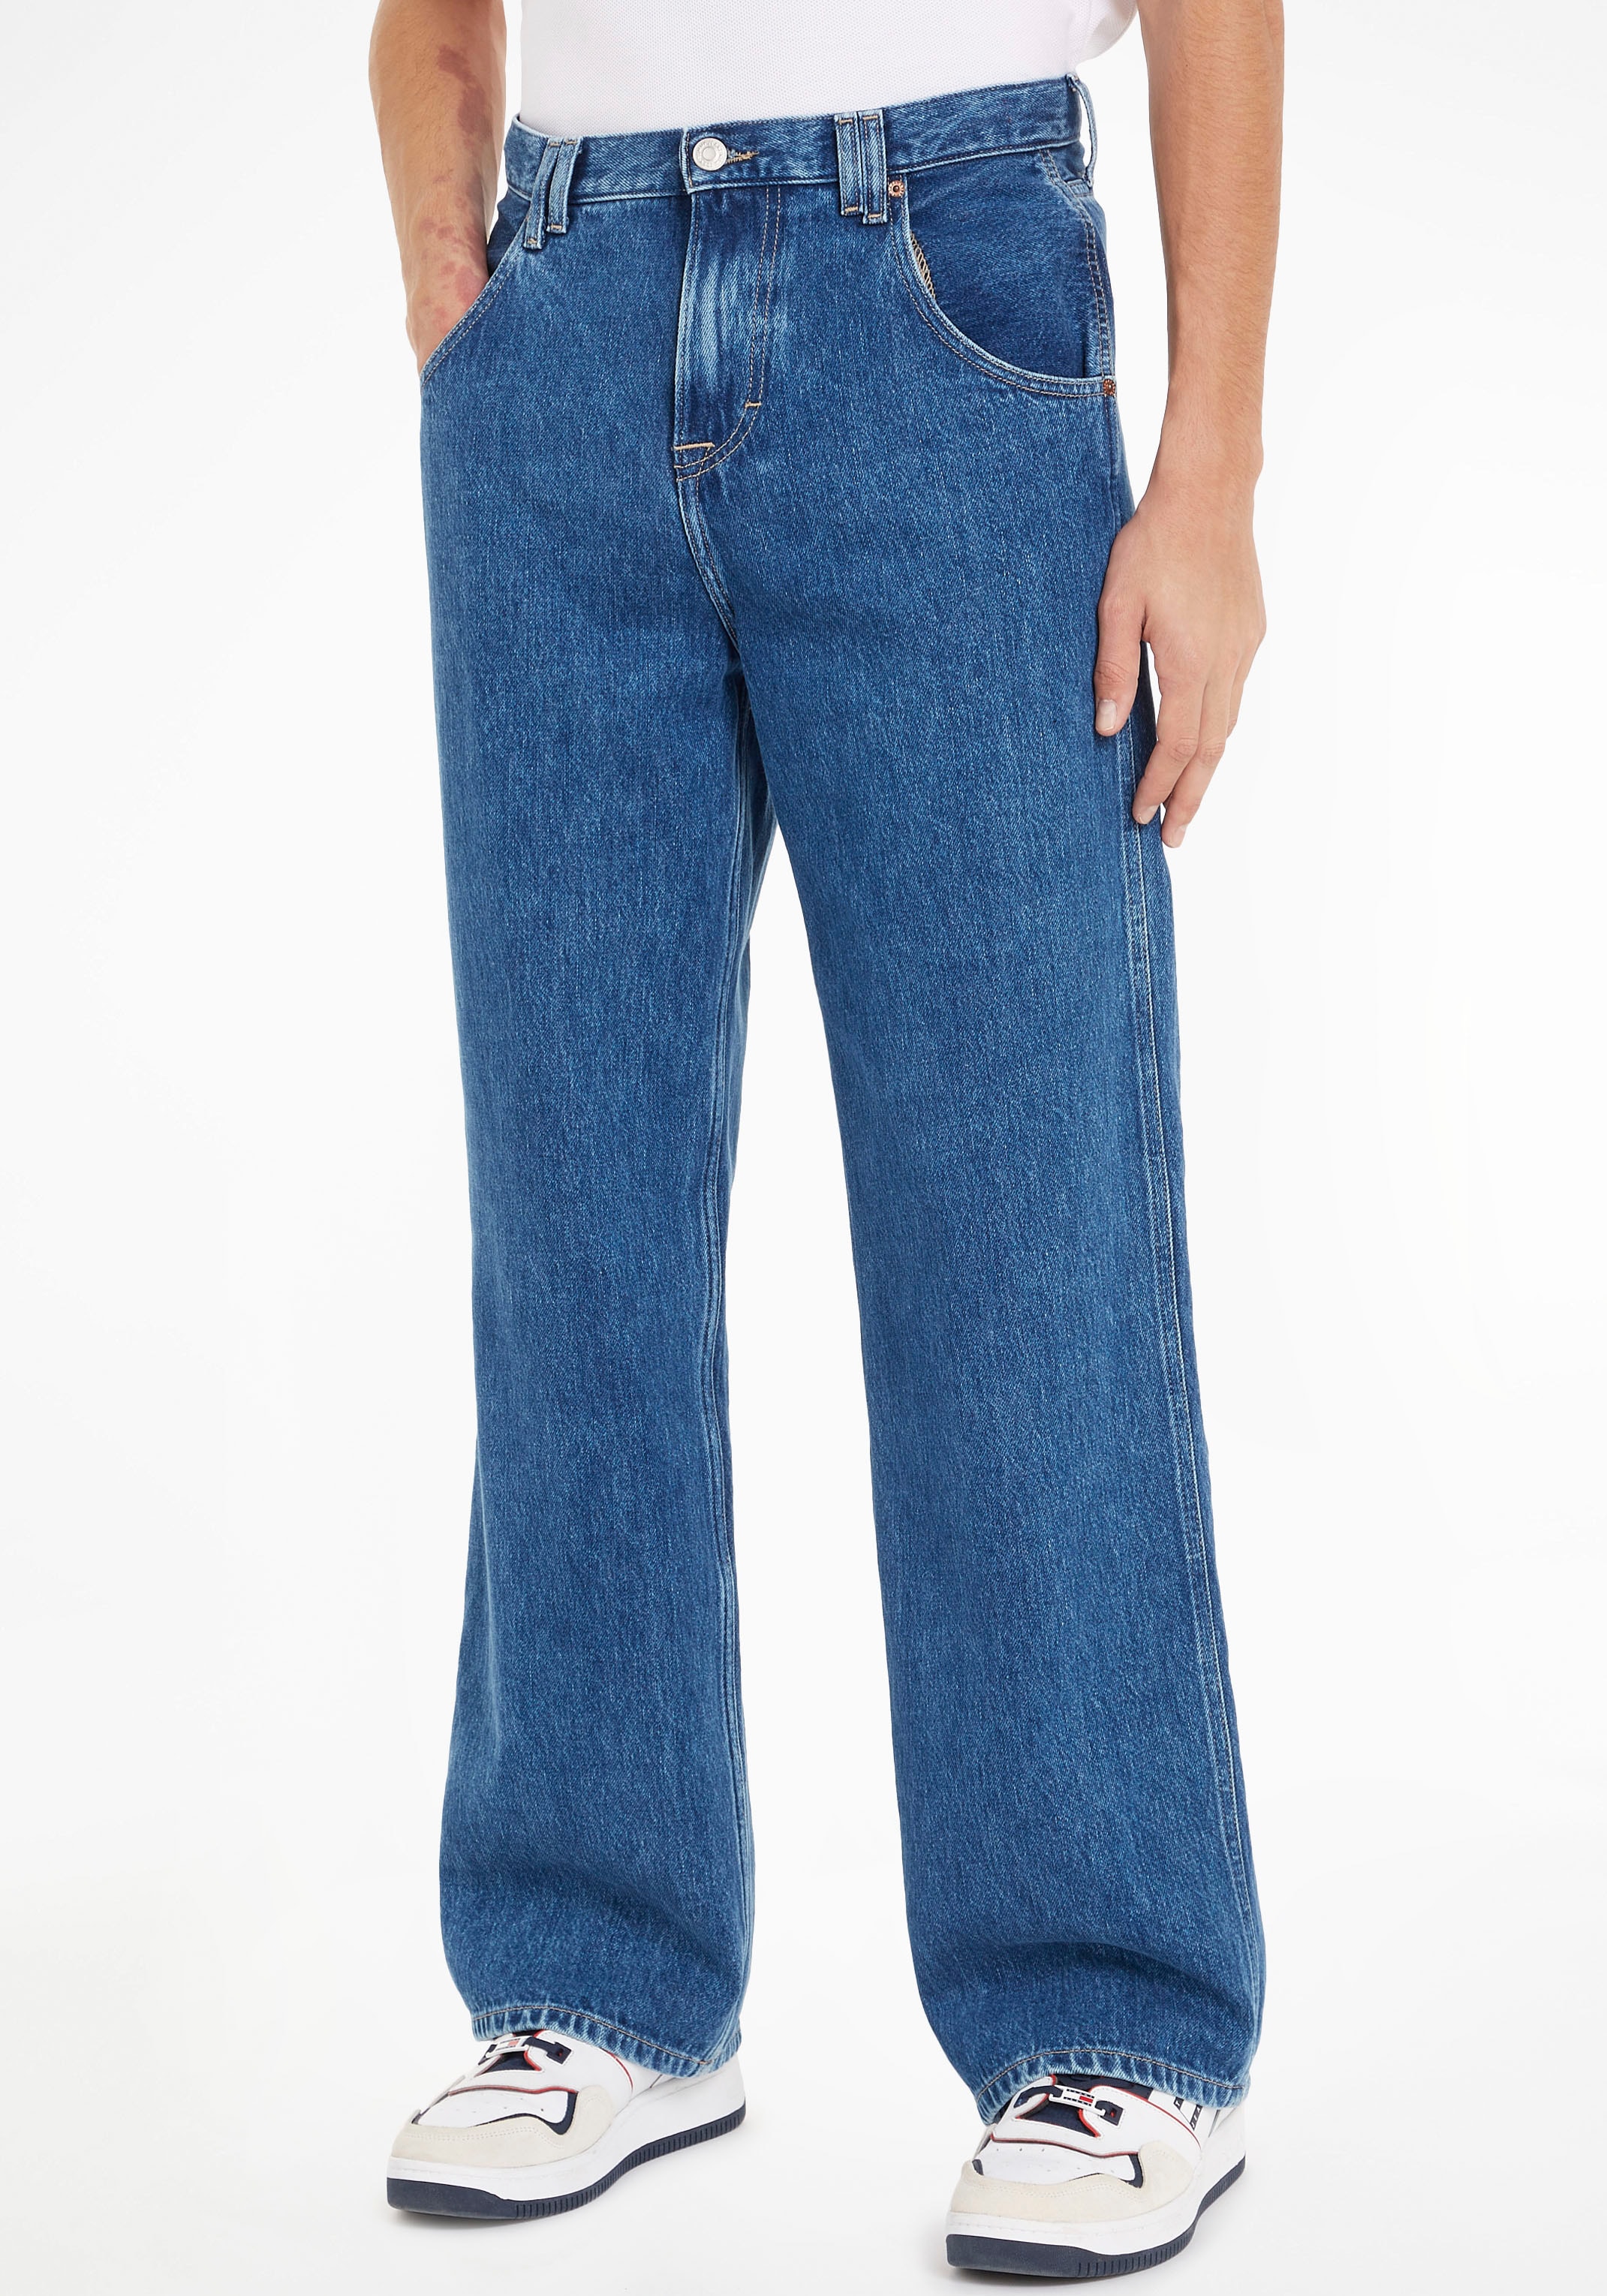 Jeans im Weite LR BGY 5-Pocket-Style Jeans klassischen CG4014«, »DAISY online JEAN Tommy